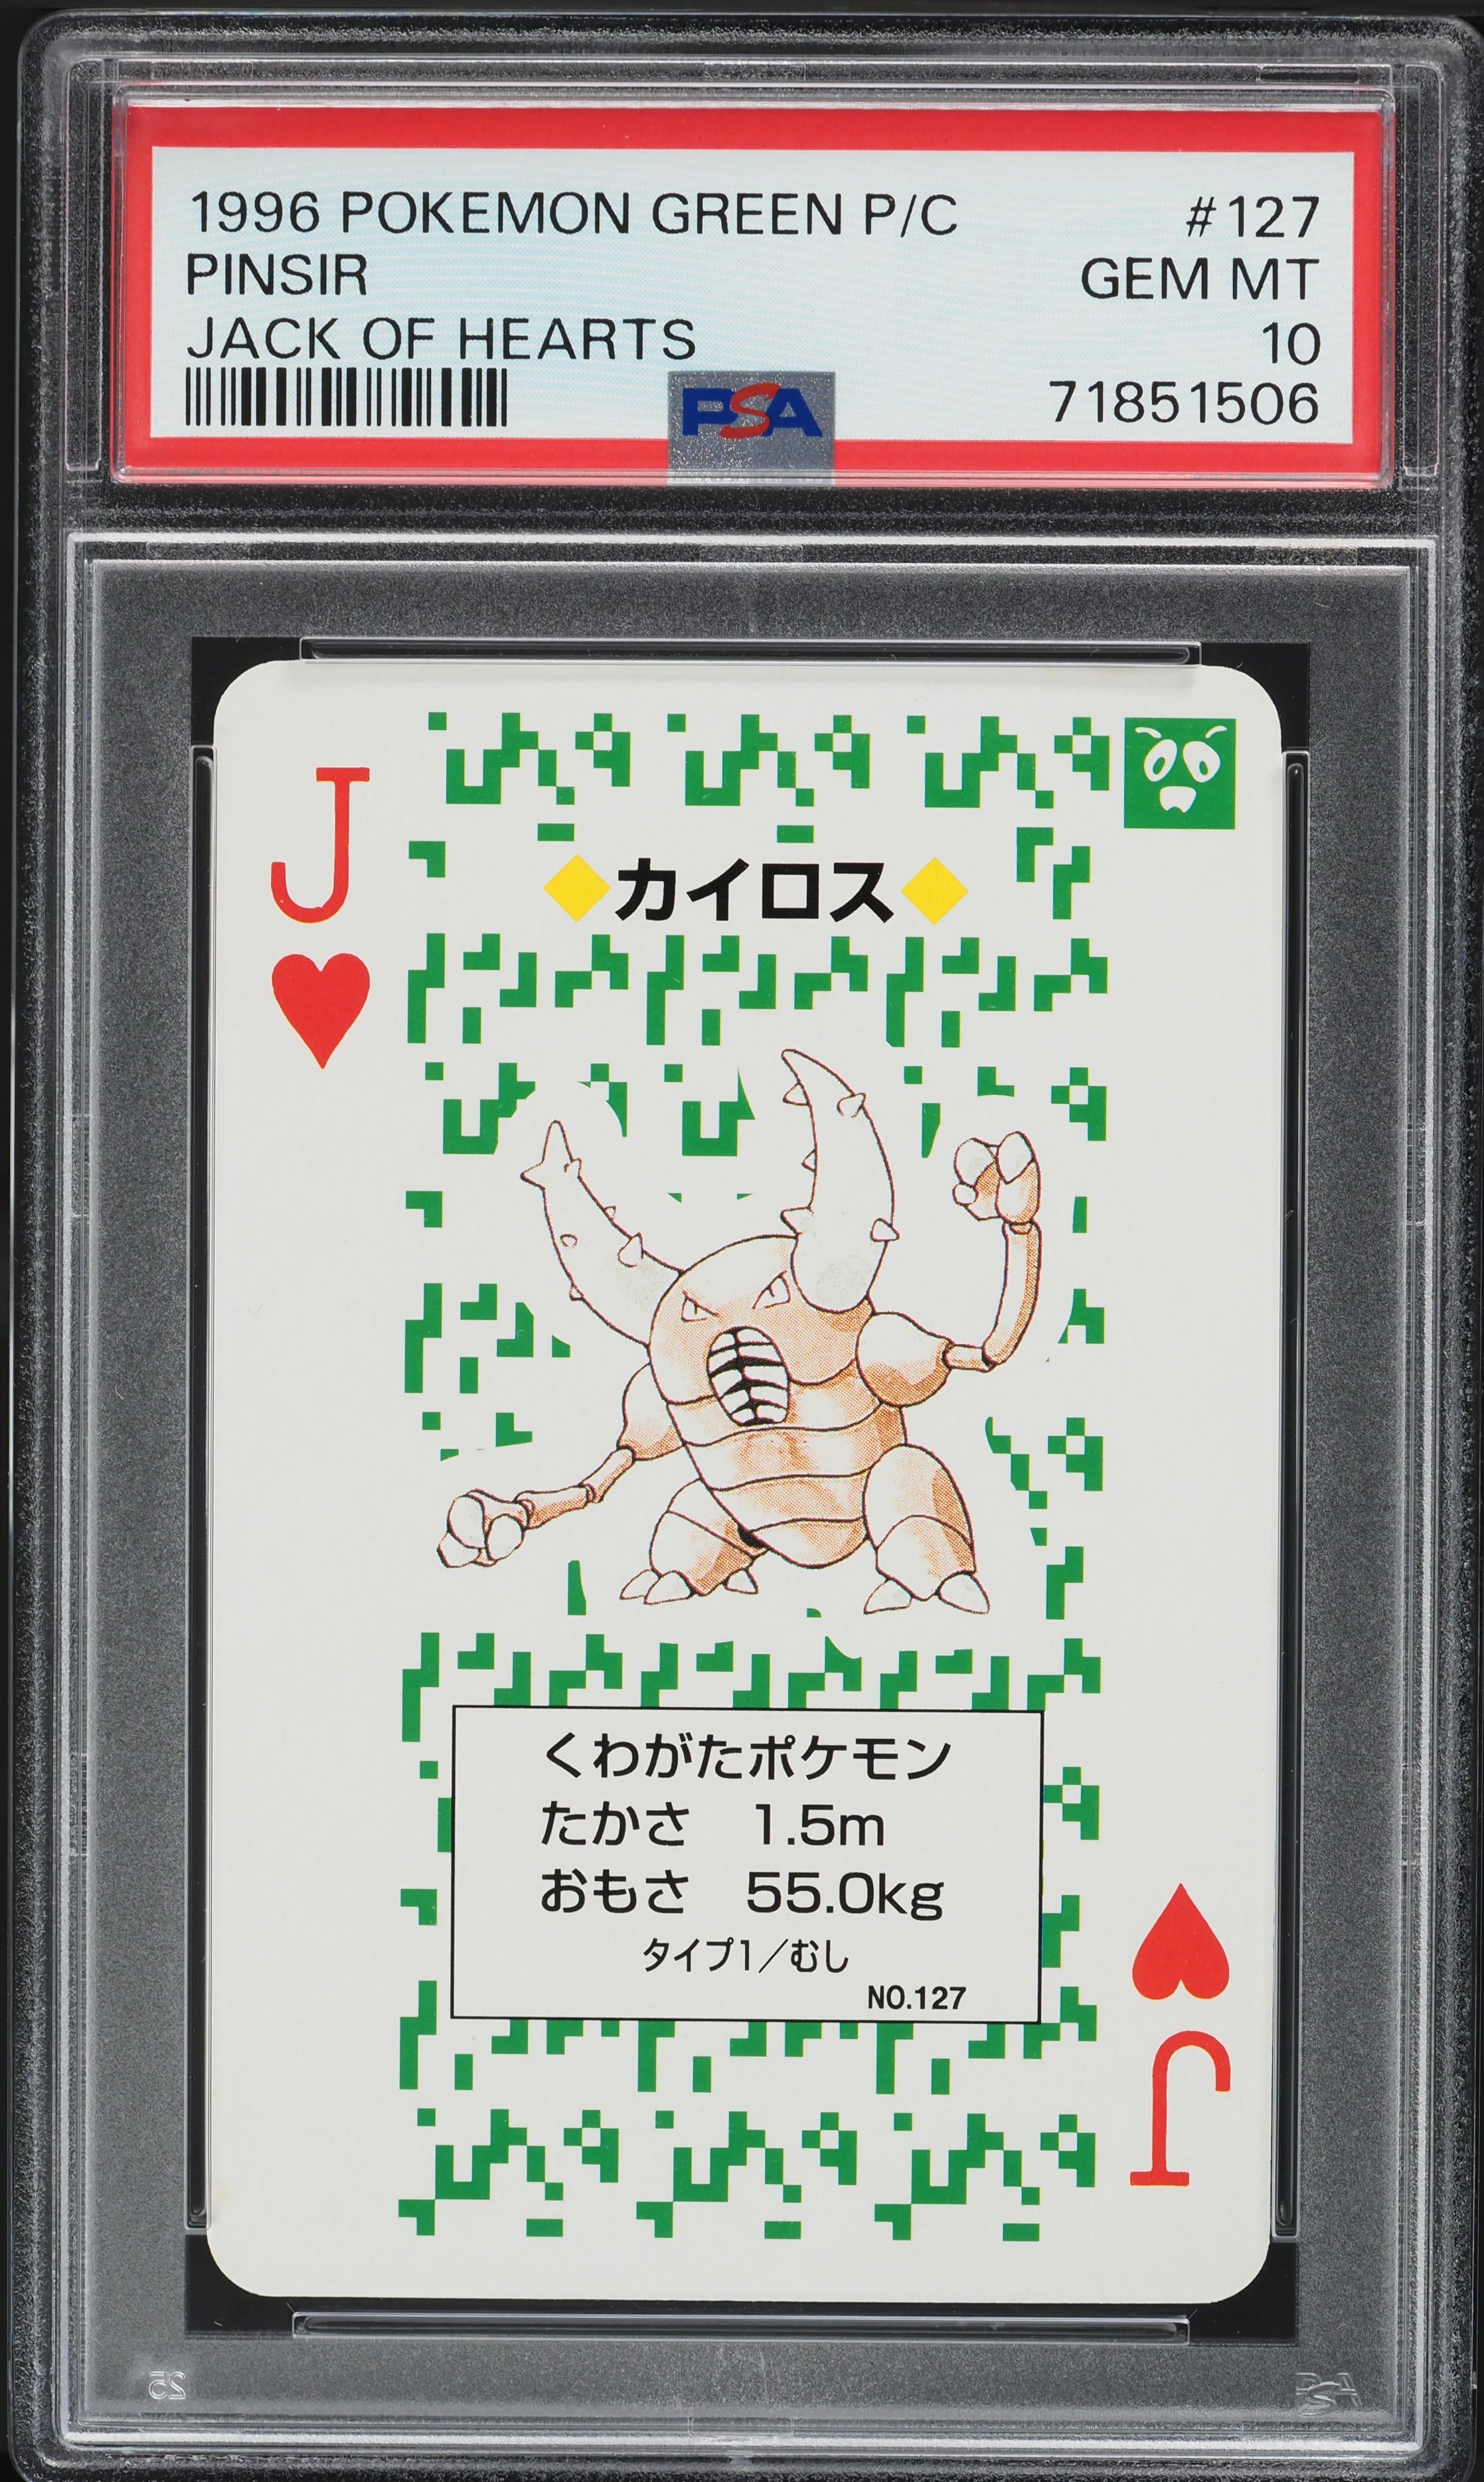 1996 Pokemon Green Version Playing Cards Jack Of Hearts Pinsir #127 PSA 10 GEM